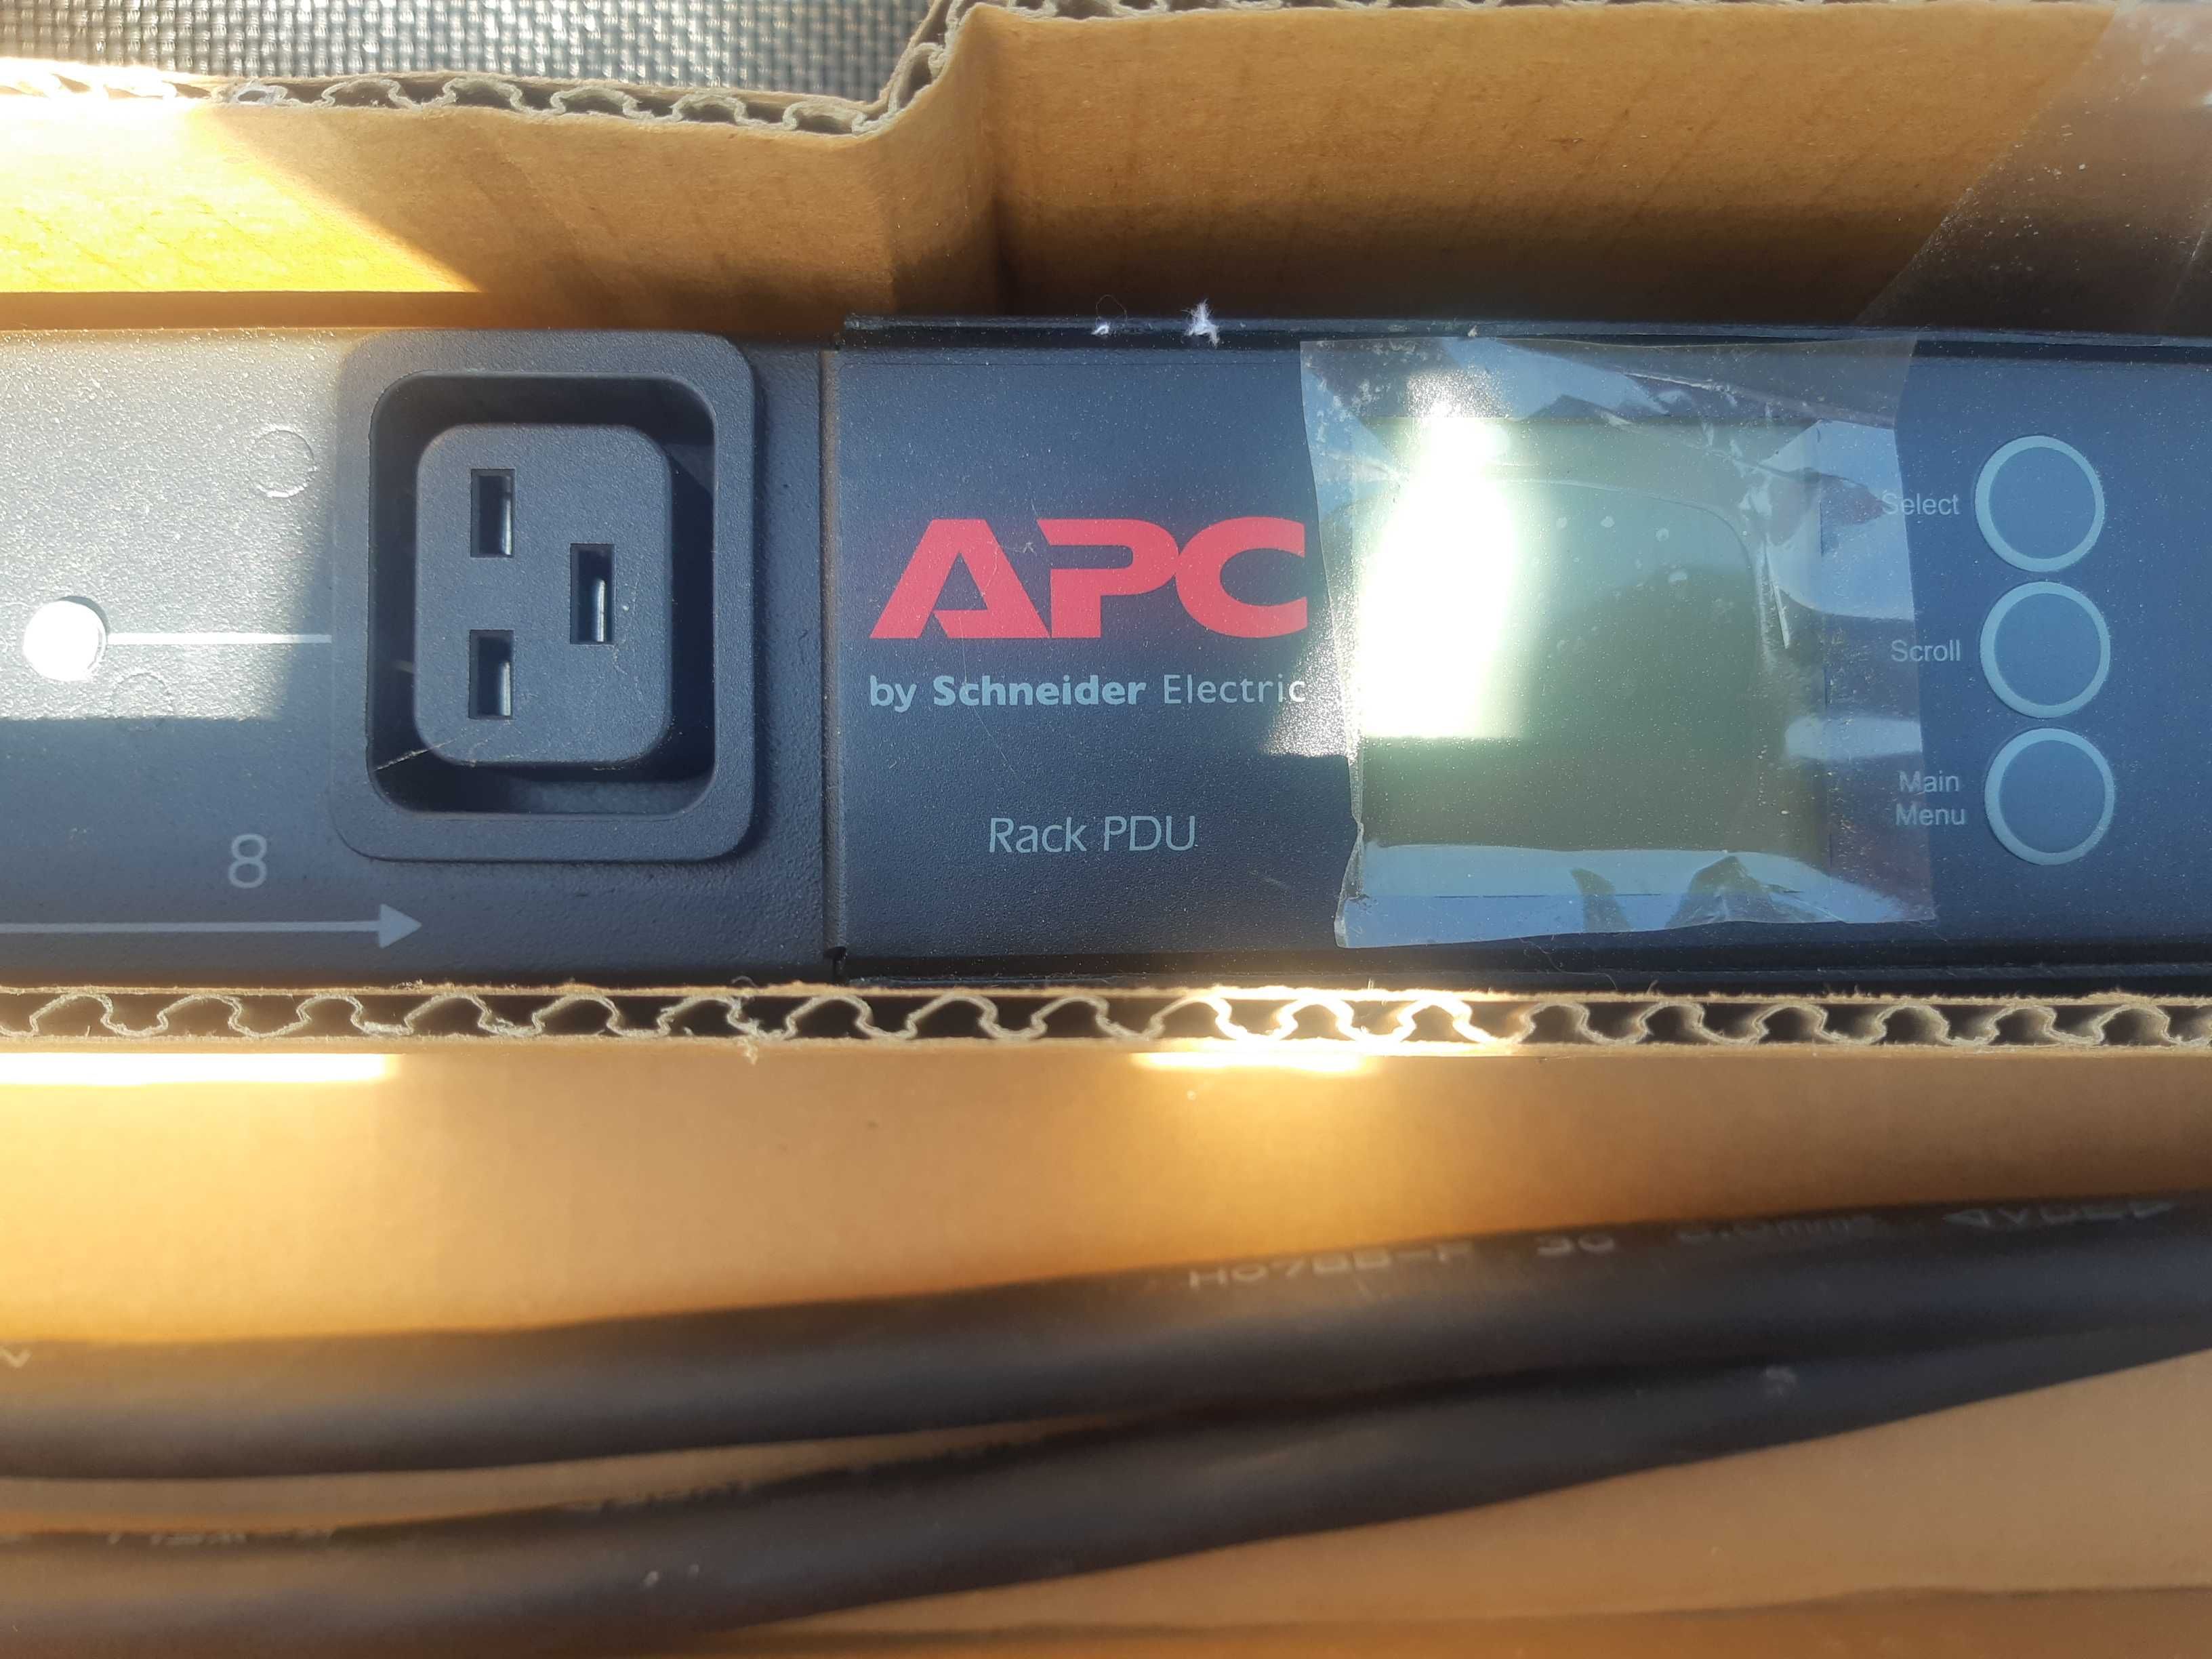 APC Rack PDU 2G - AP8953 - 8 pieces, new in the box